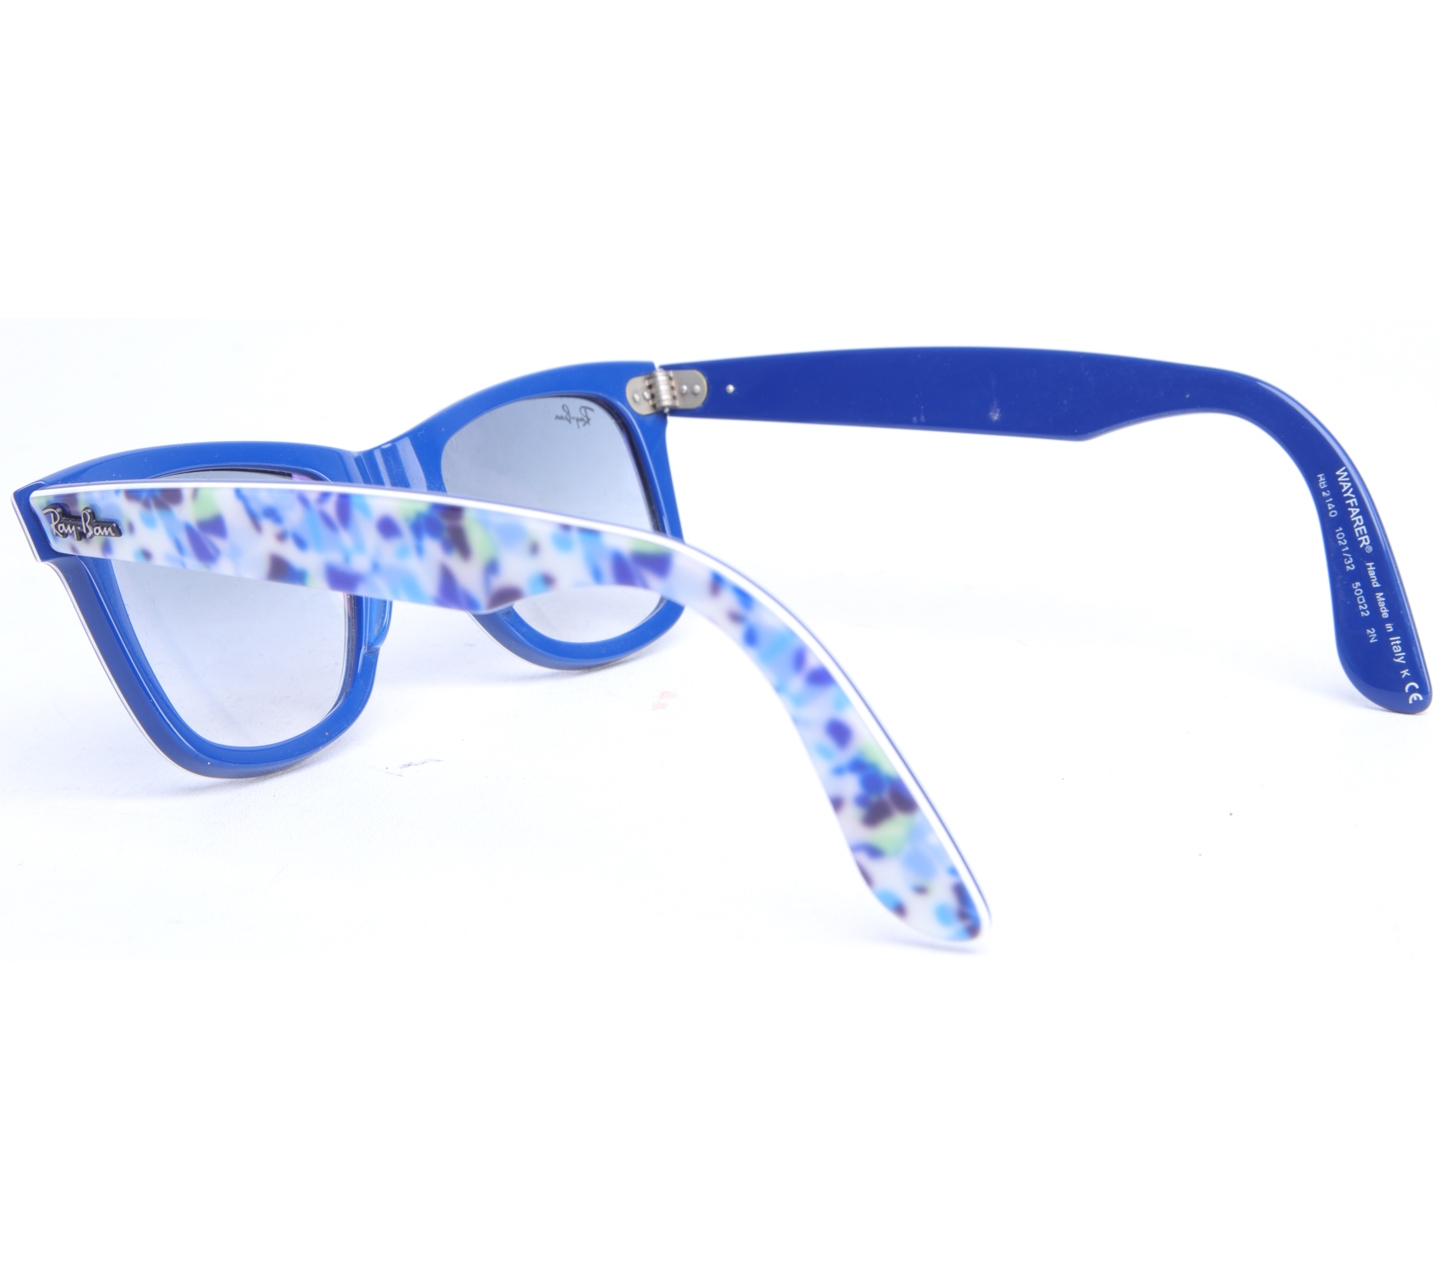 Ray-Ban Blue Wayfarer Special Series #1 Sunglasses